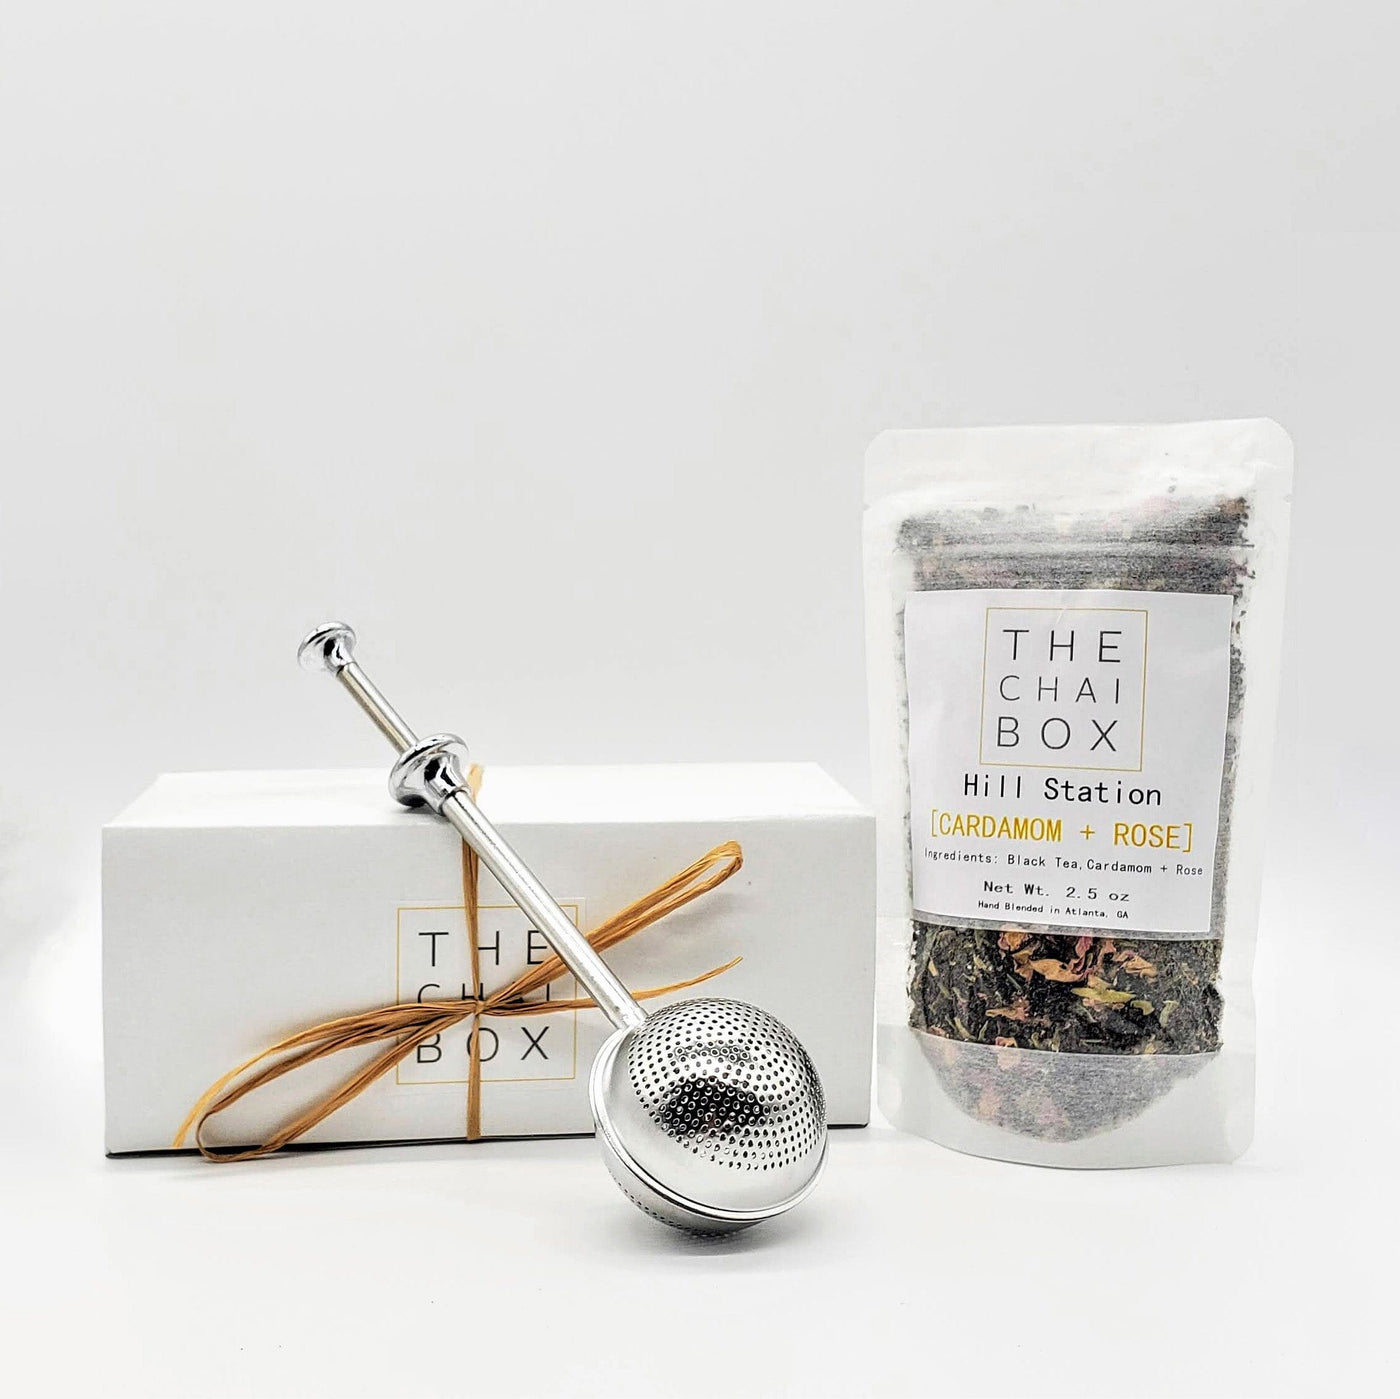 Hill Station Tea Blend Gift Set - Cardamom & Rose Tea The Chai Box 